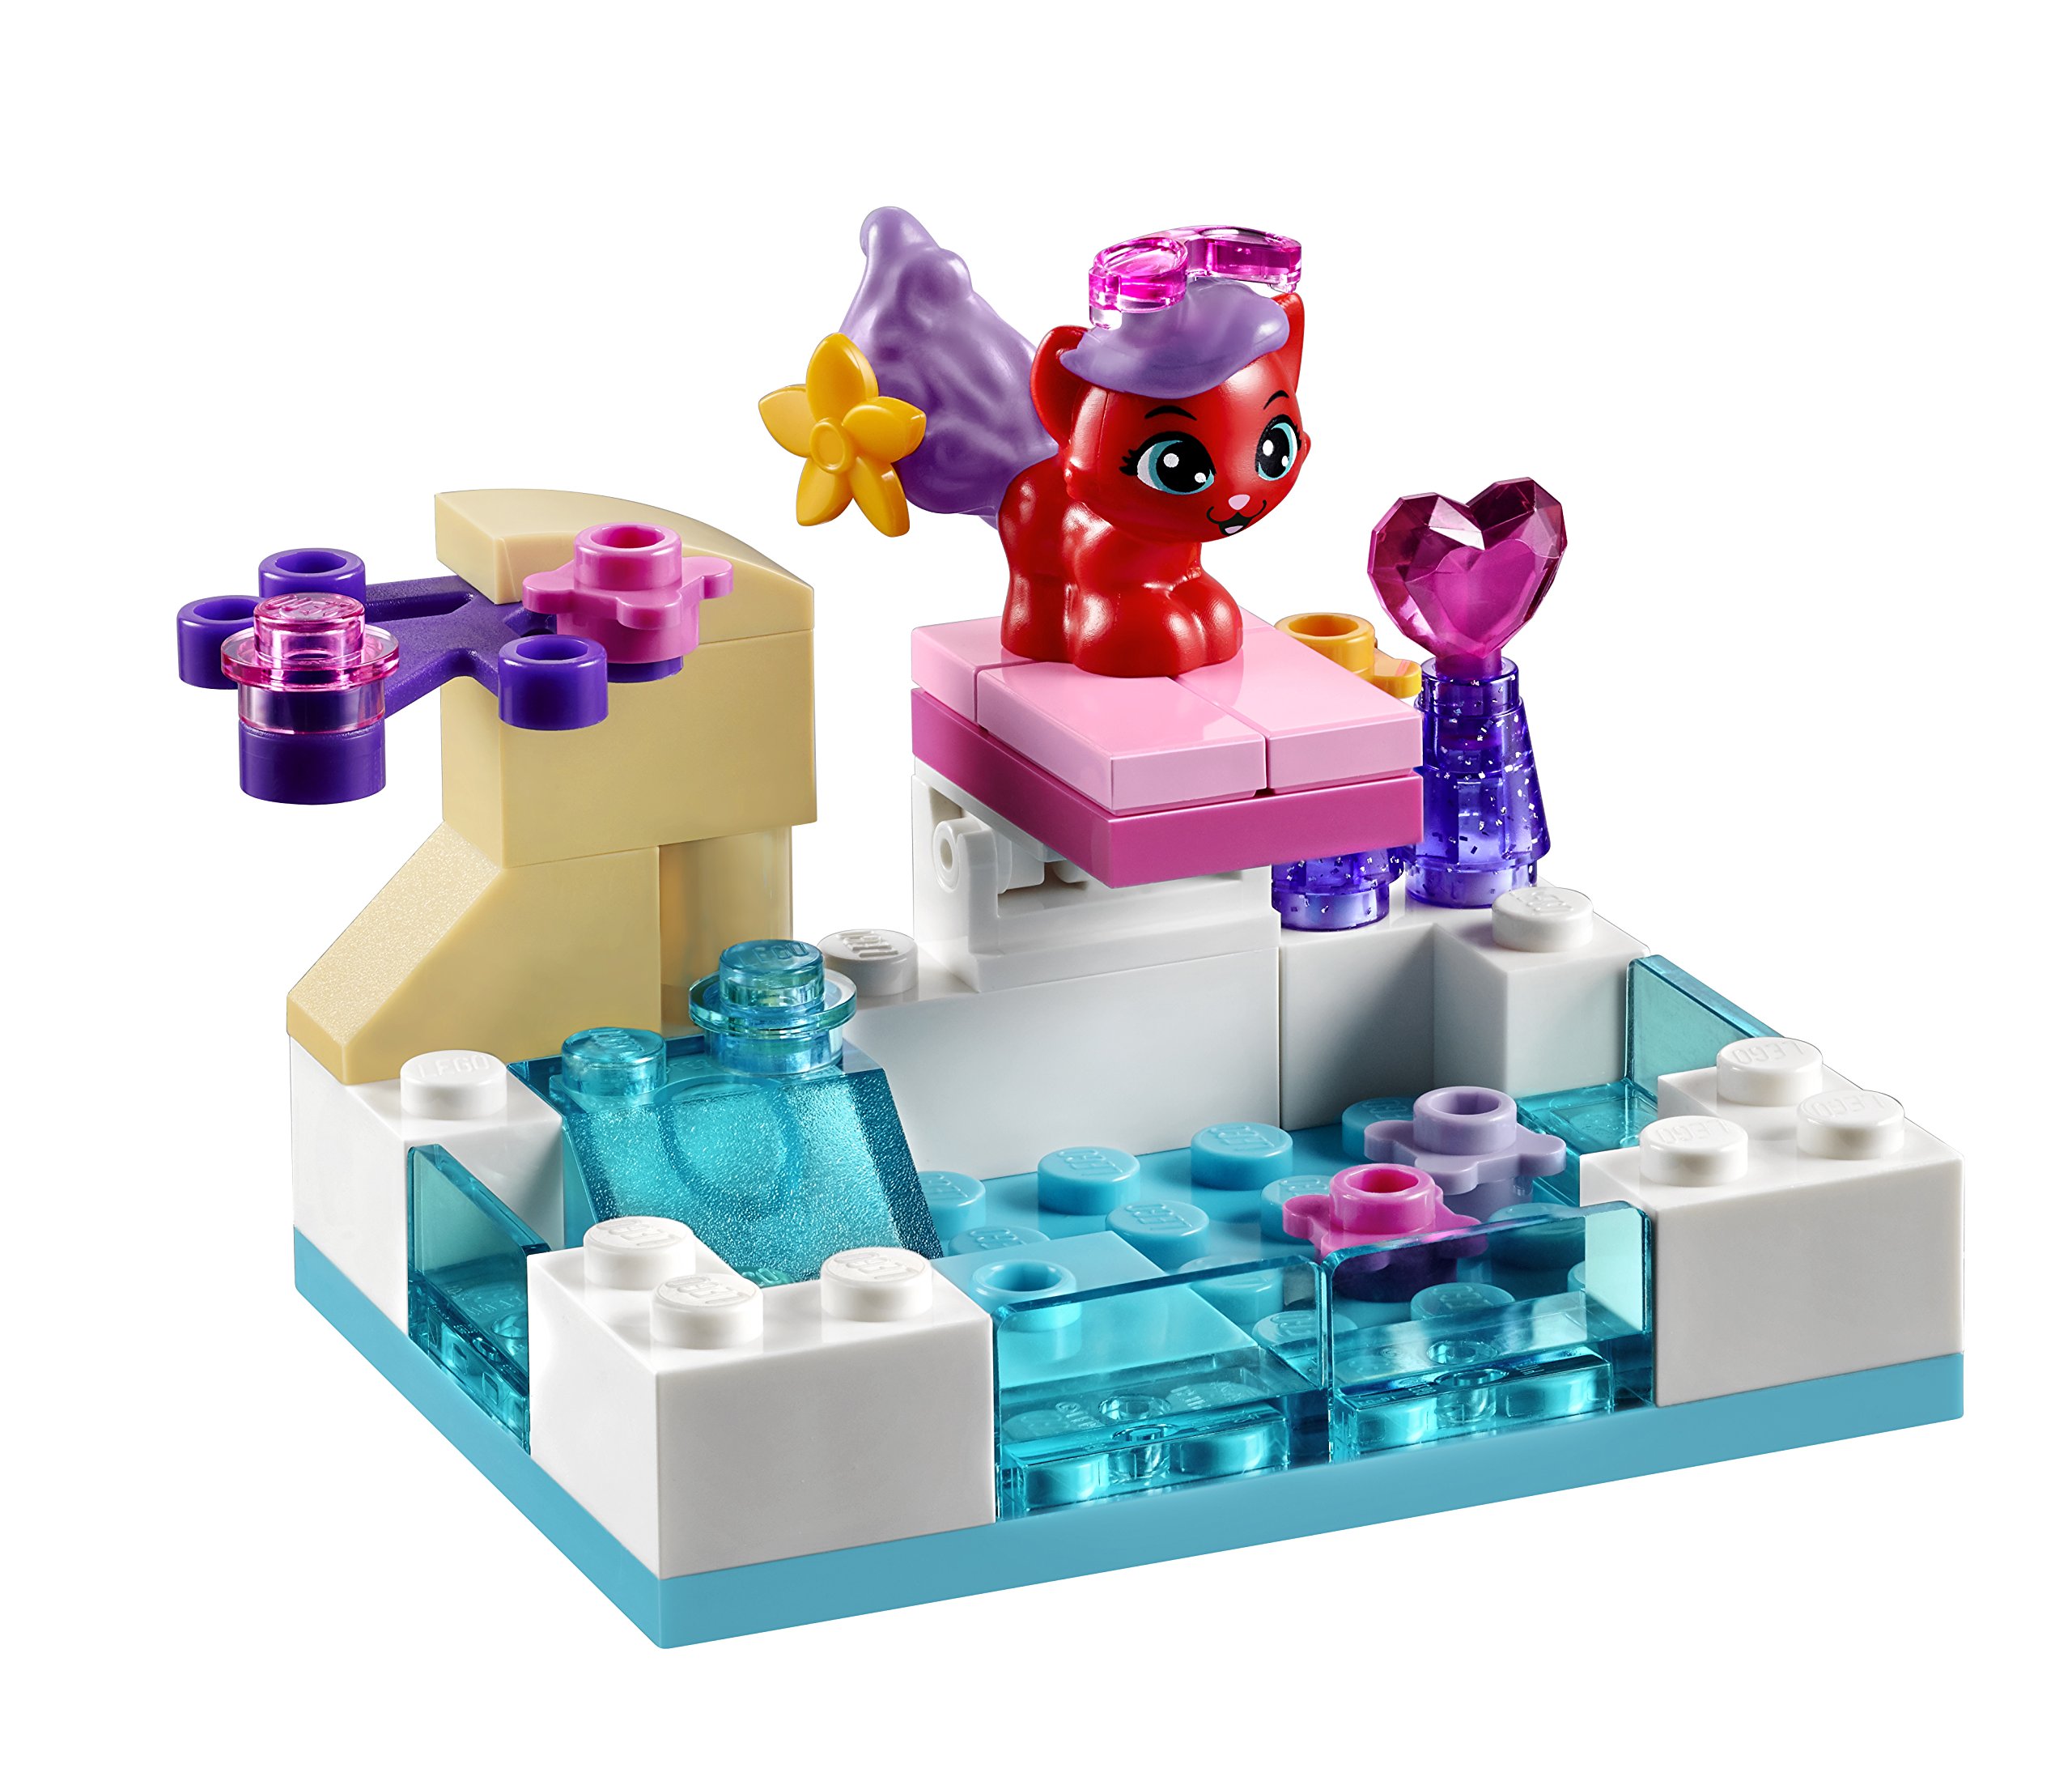 LEGO Disney Princess Treasure's Day at The Pool Building Kit (70 Piece)